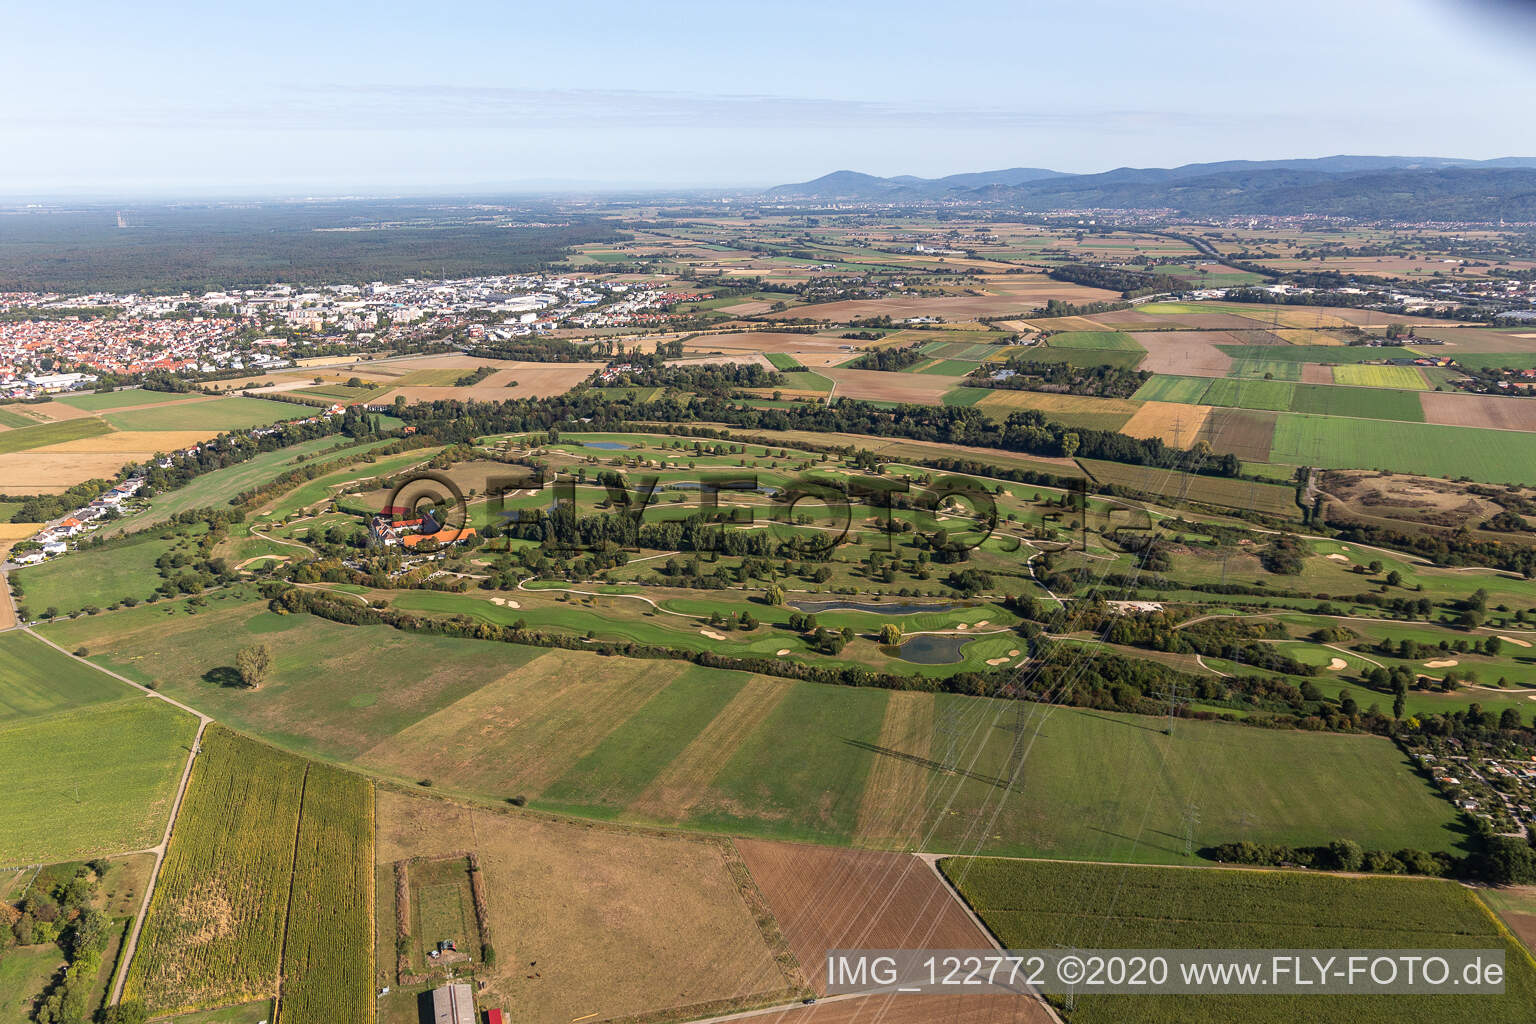 Vue aérienne de Superficie du parcours de golf Heddesheim Gut Neuzenhof à Viernheim à Heddesheim dans le département Bade-Wurtemberg, Allemagne